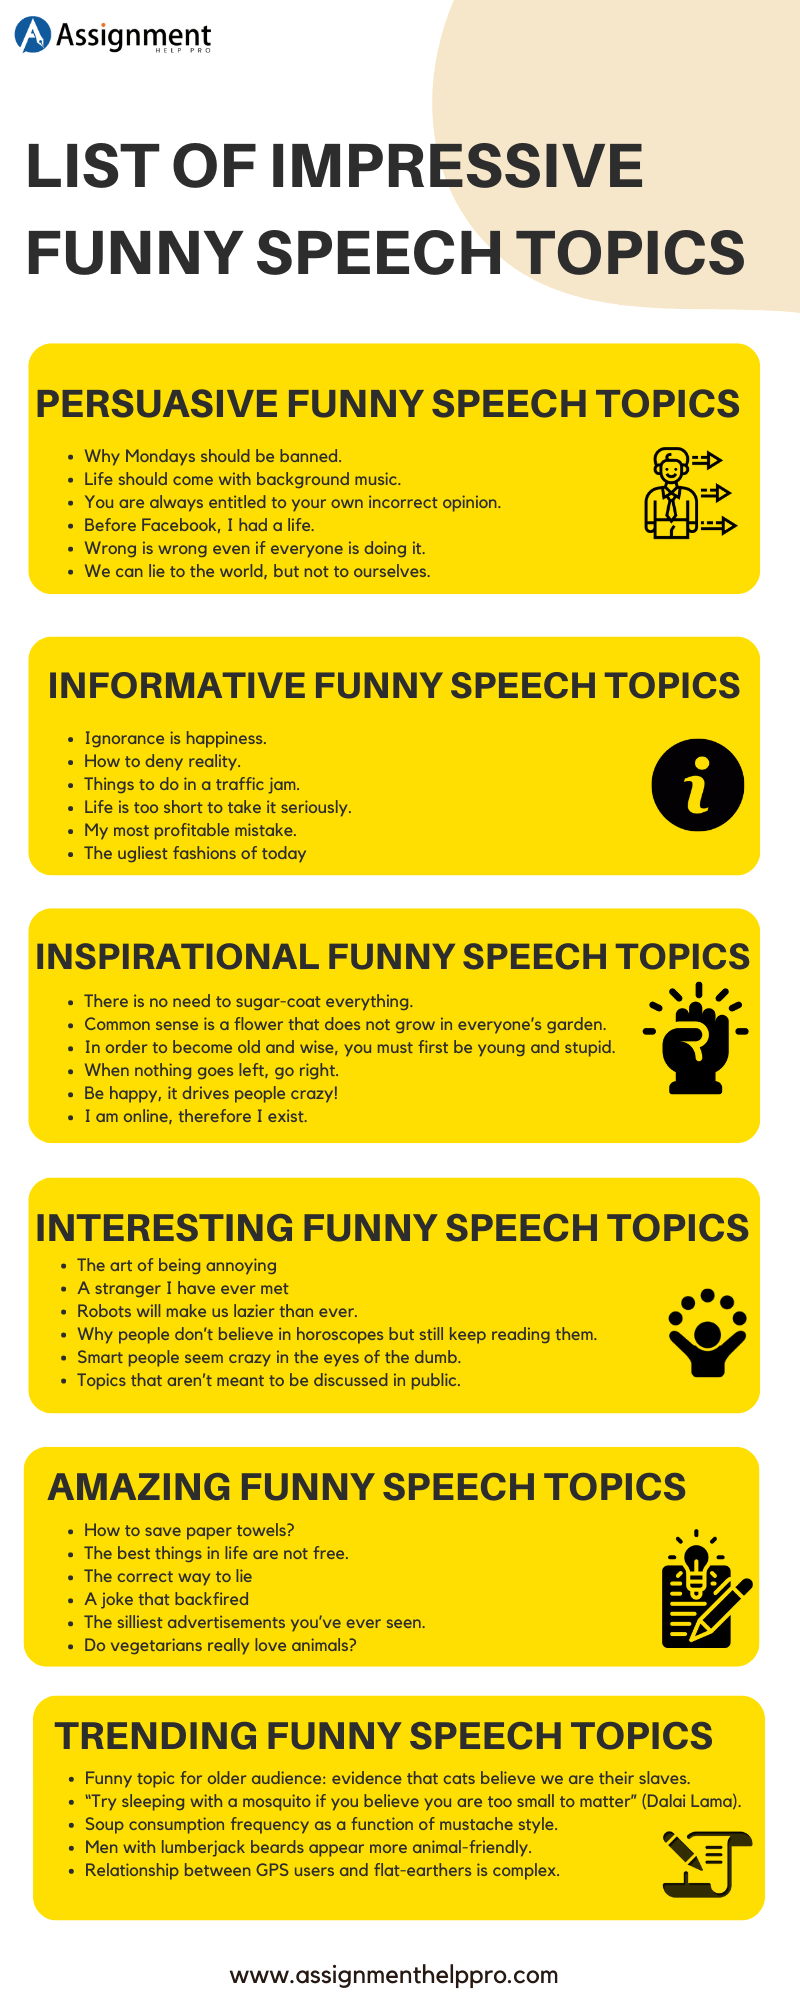 150 Impressive Funny Speech Topics and Ideas To Consider